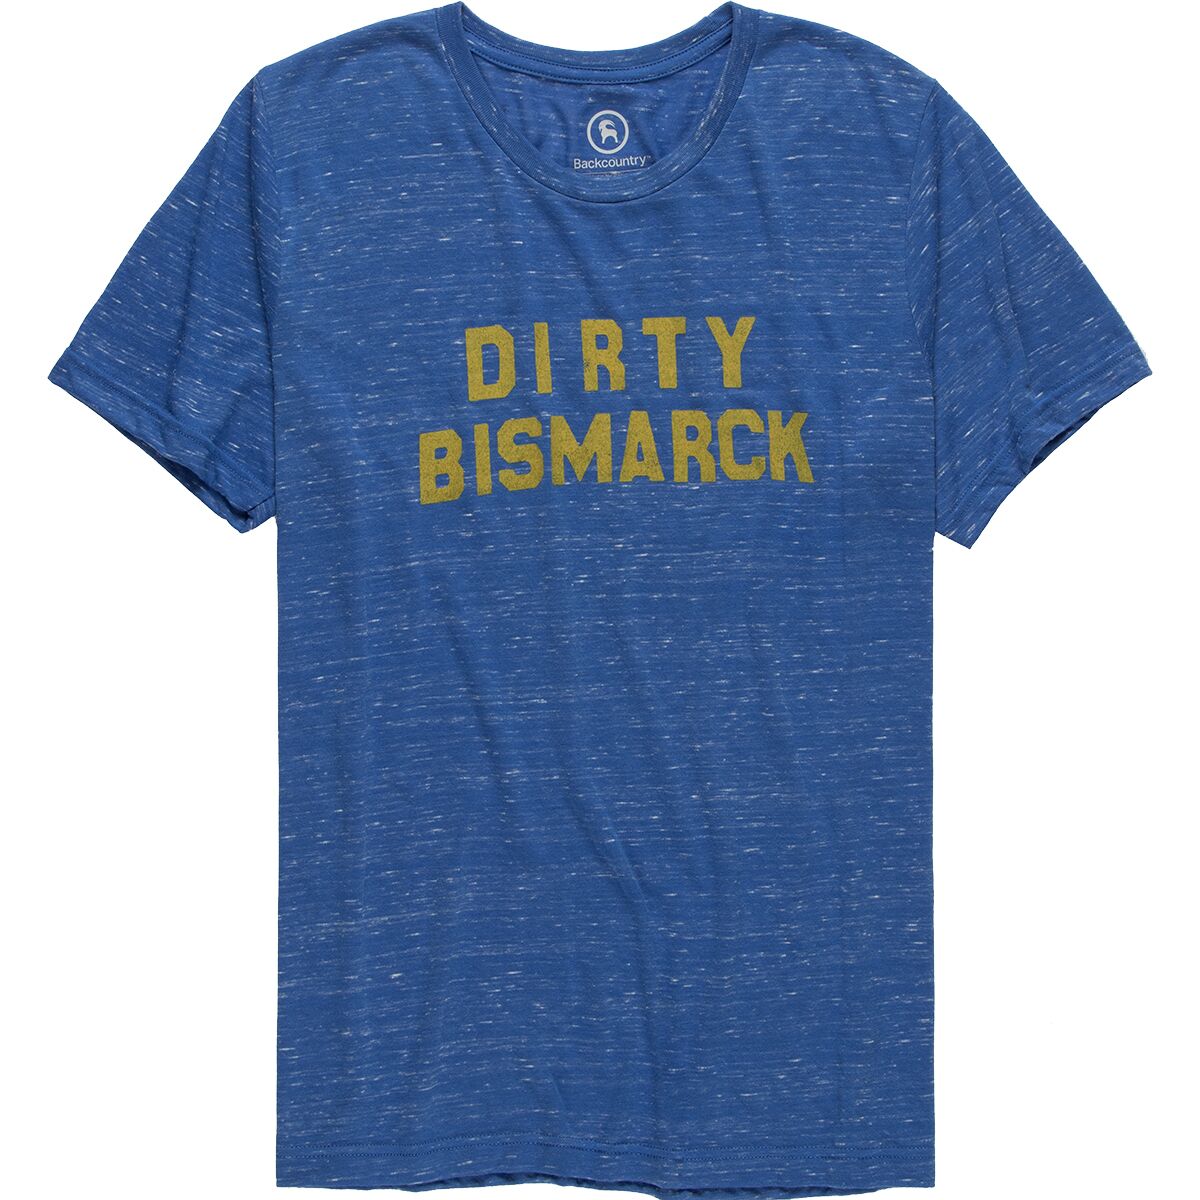 Backcountry Dirty Bismarck T-Shirt - Men's